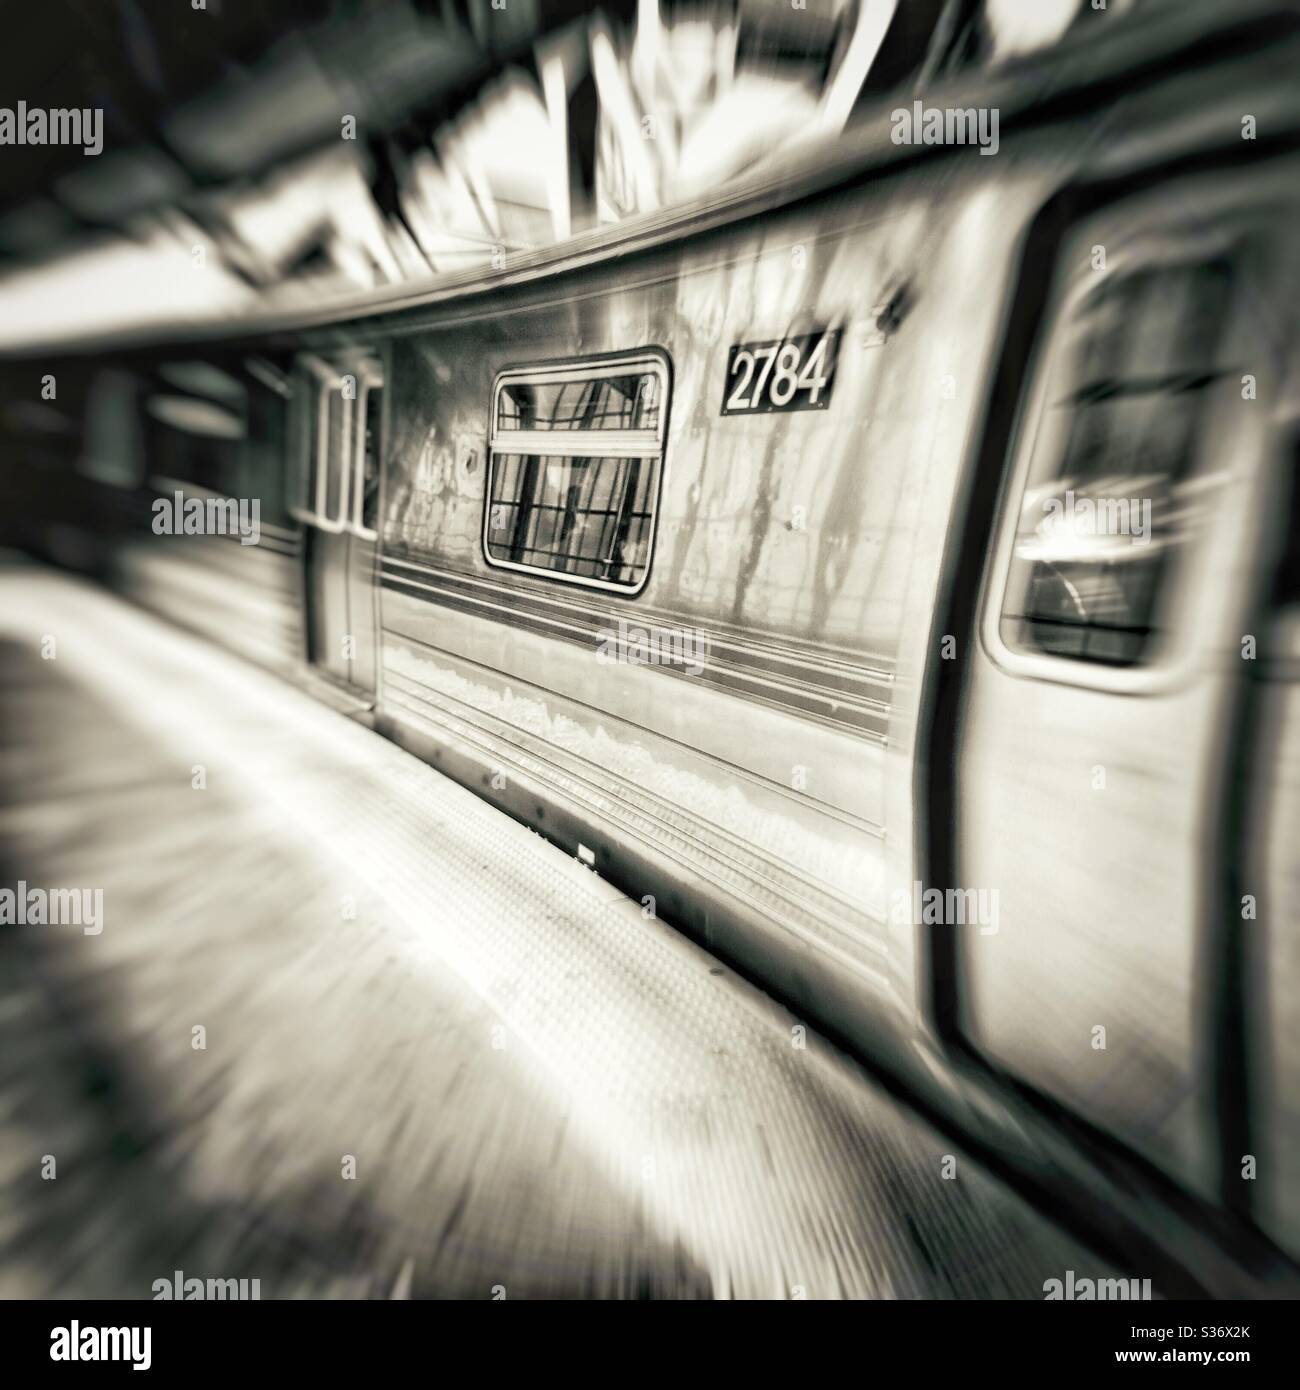 Subway train in motion Stock Photo